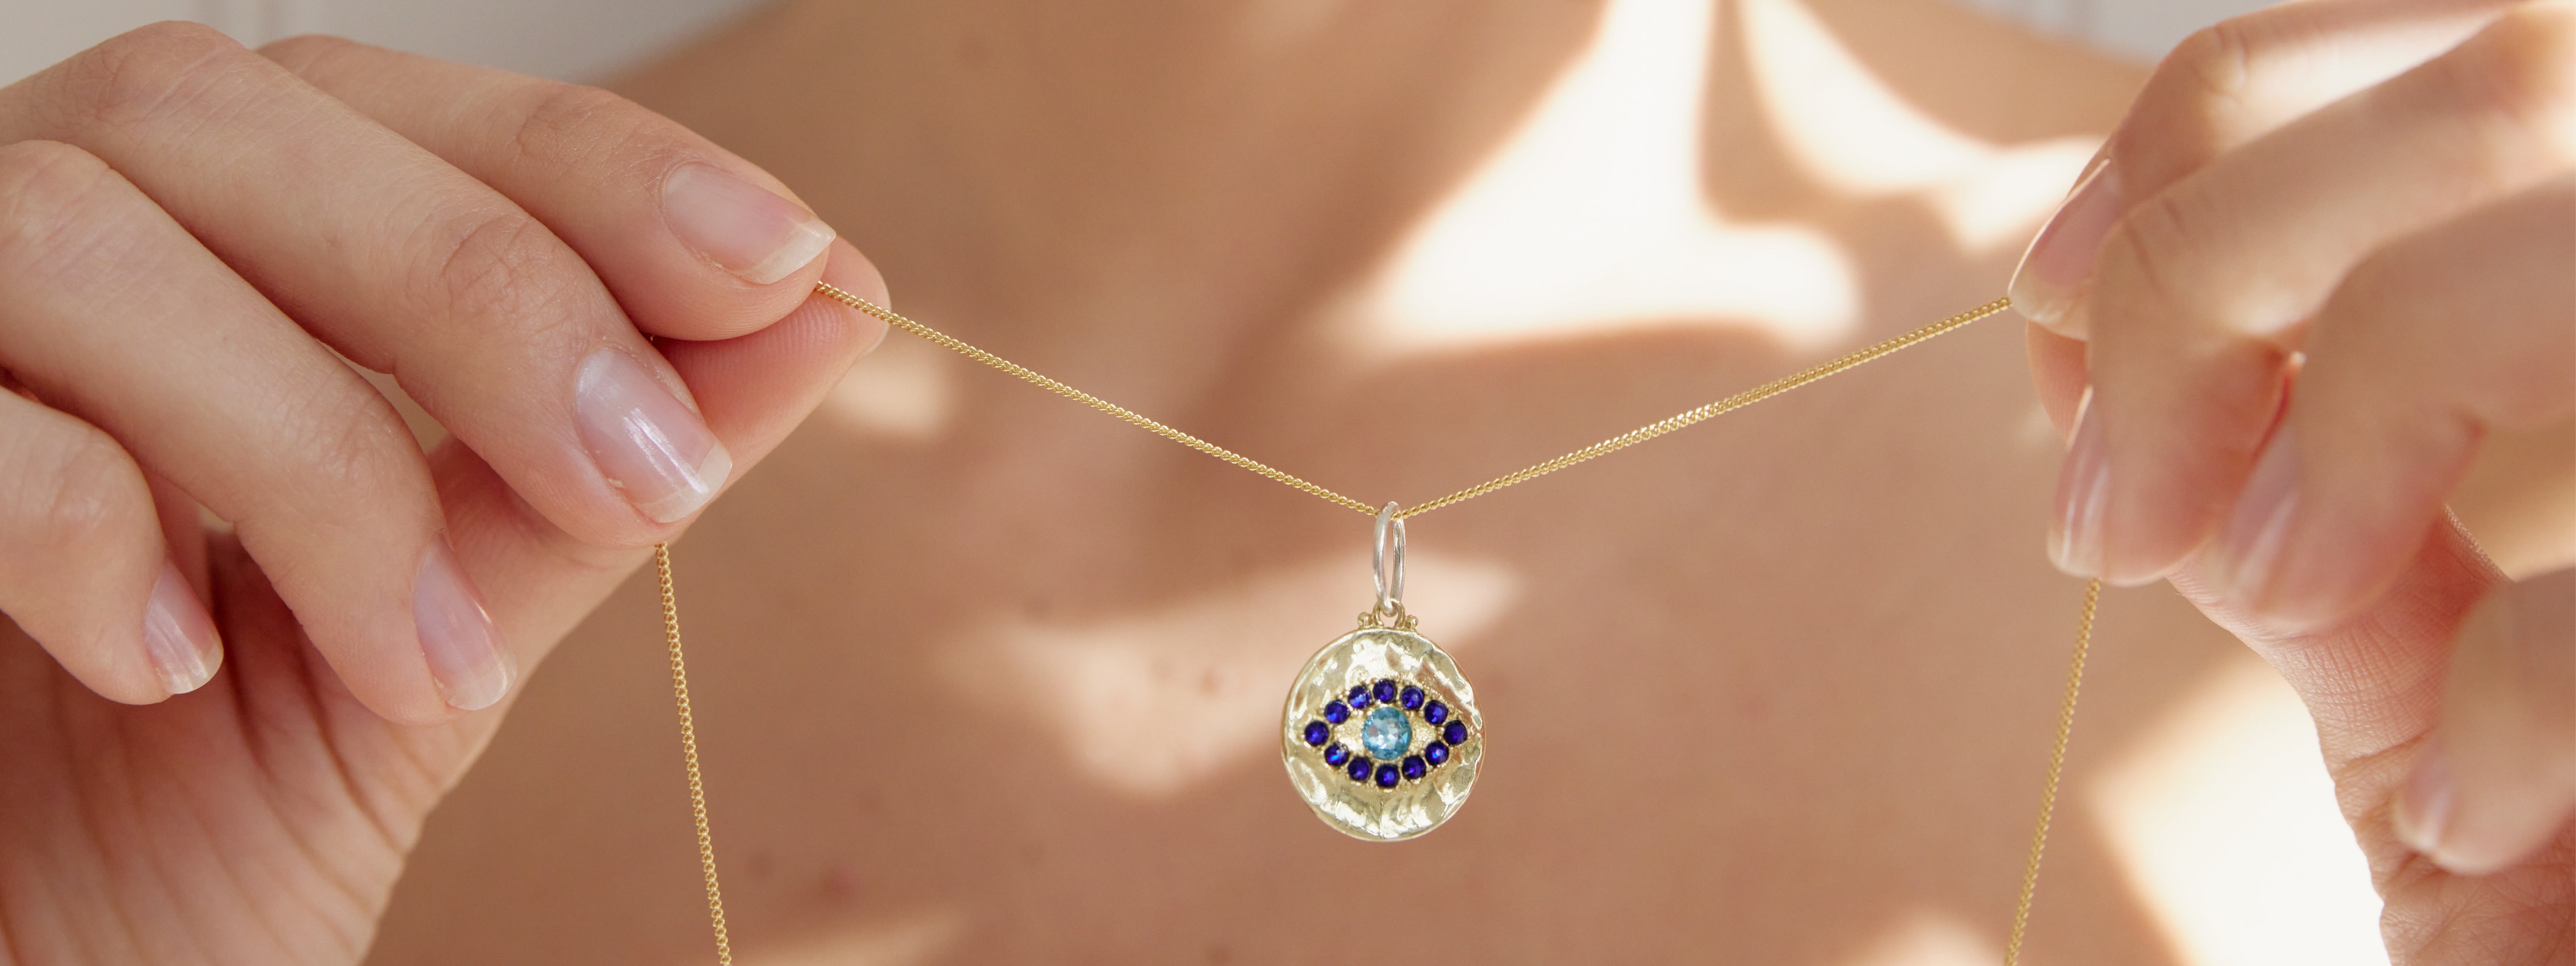 Spiritual Jewelry | I Am Worthy - Healing Necklace